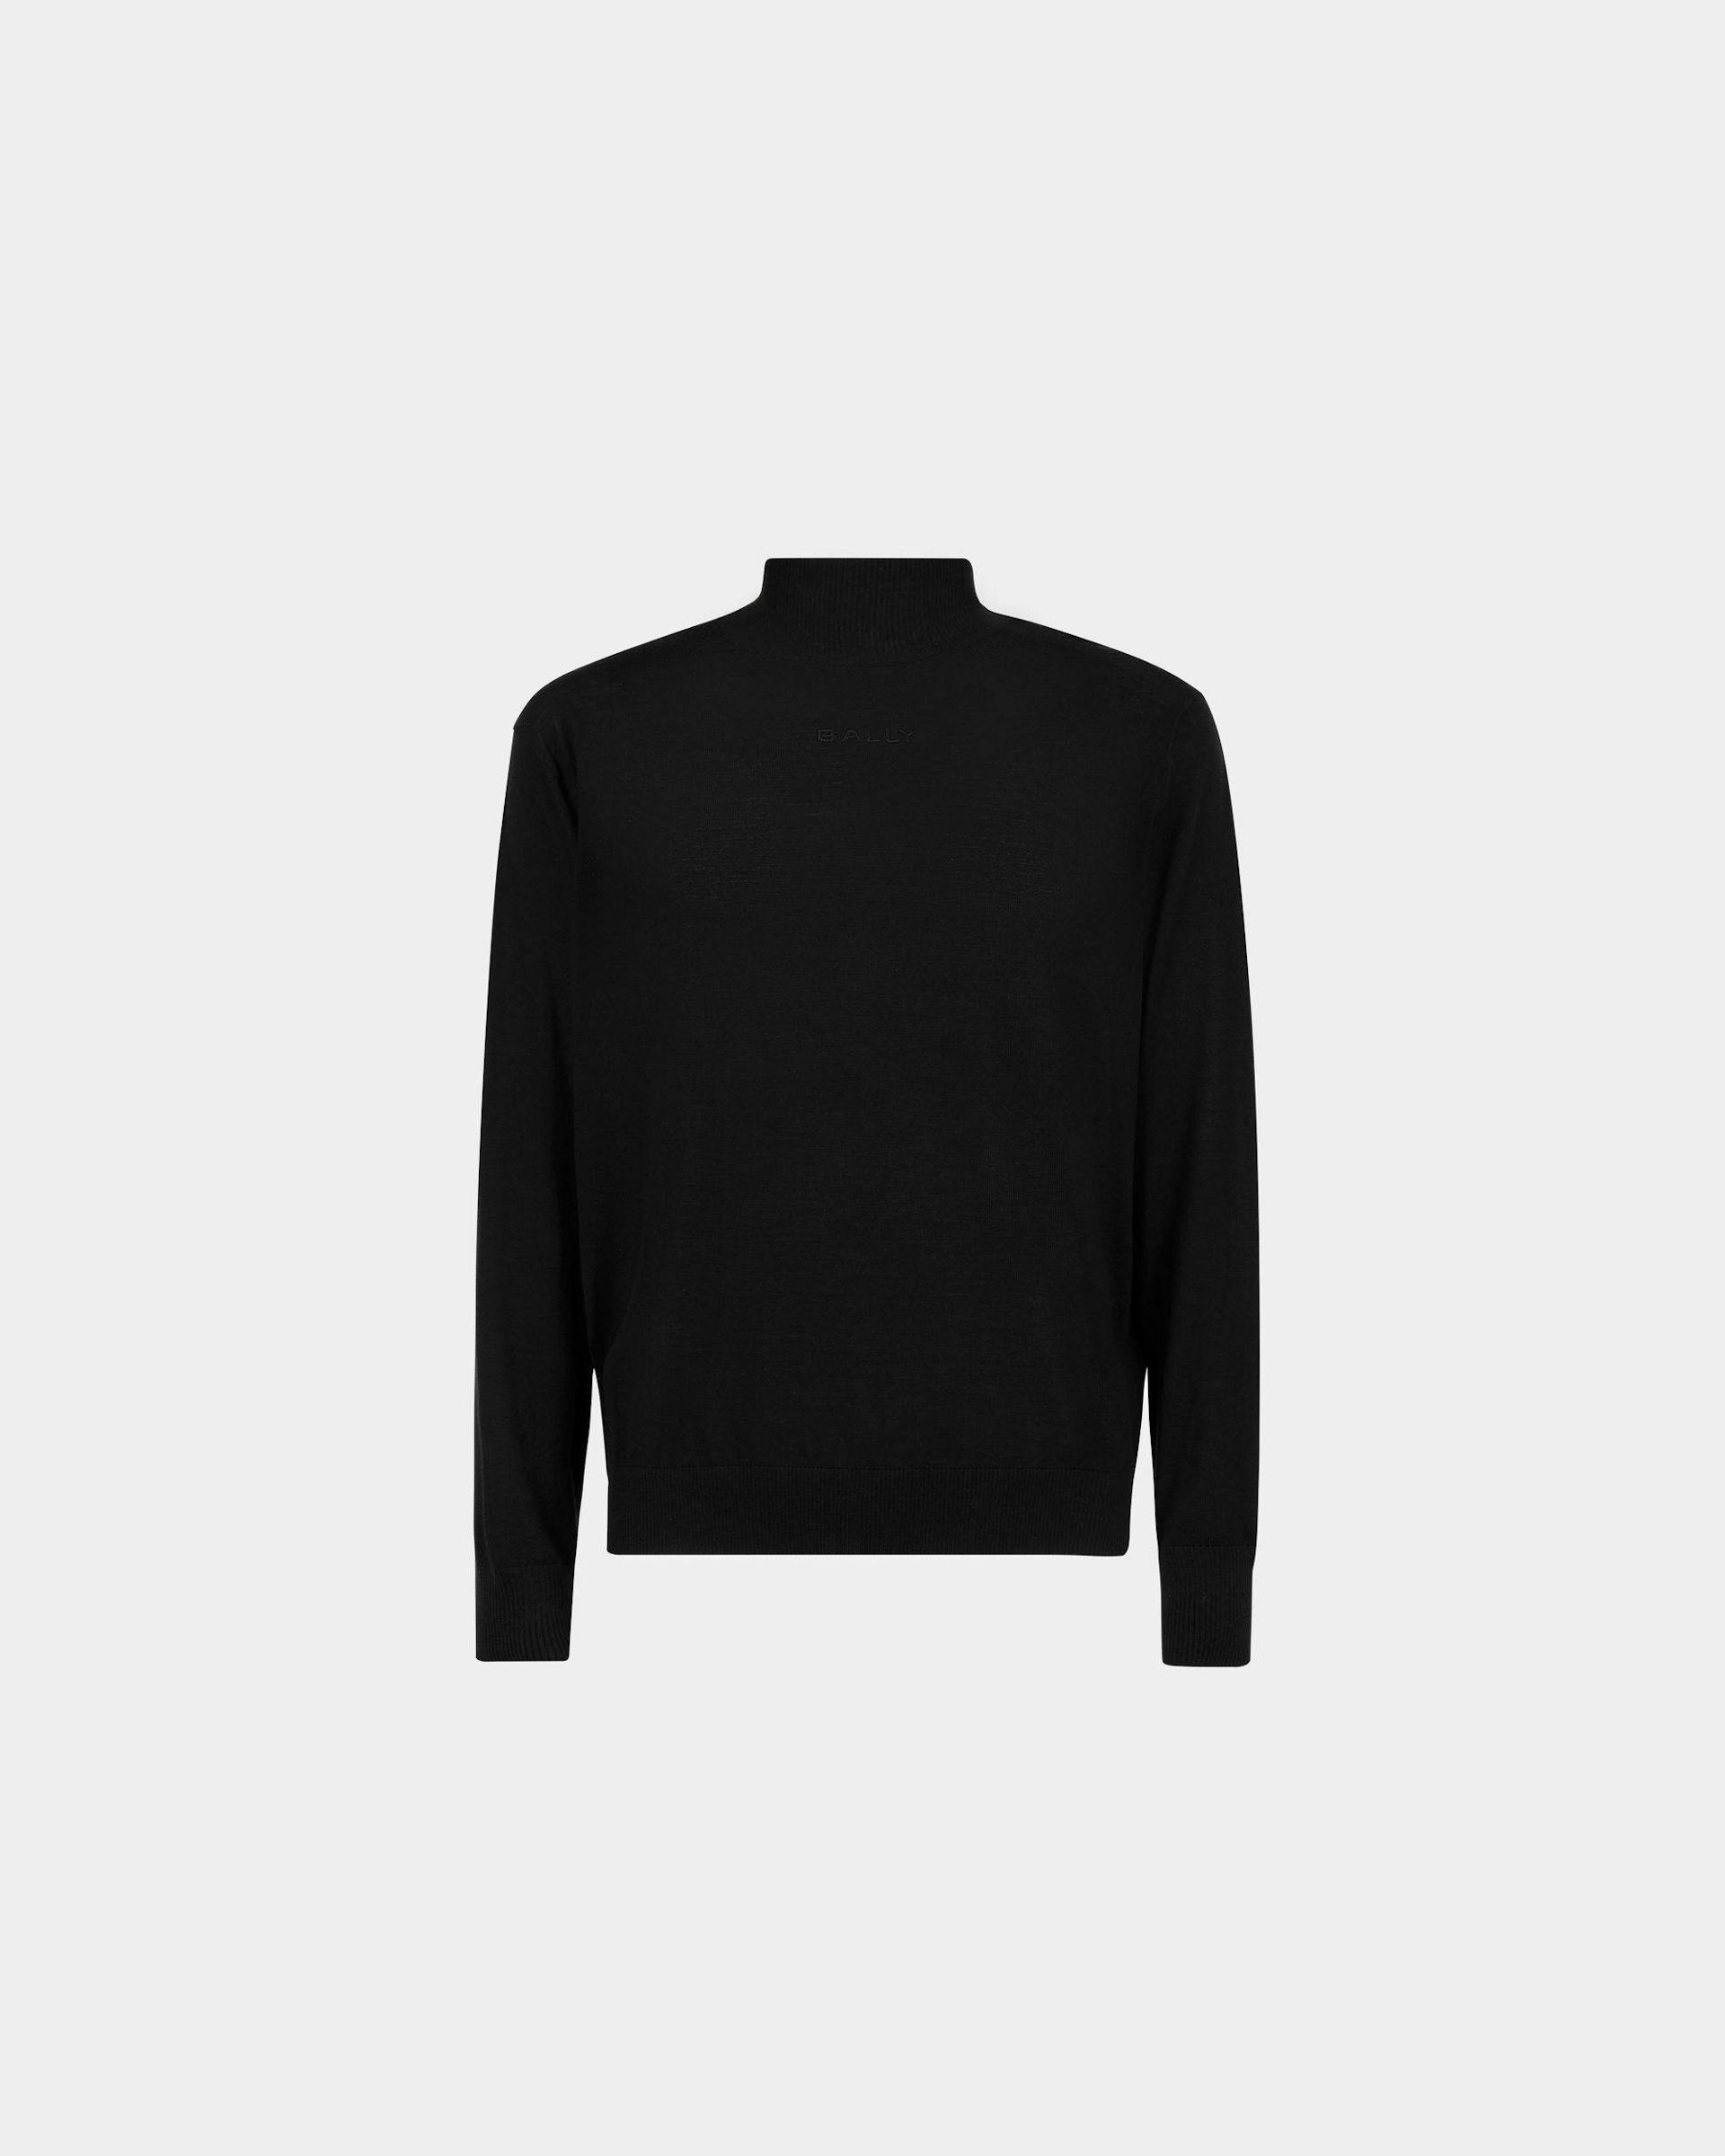 Men's Roll Neck Sweater in Black Wool | Bally | Still Life Front